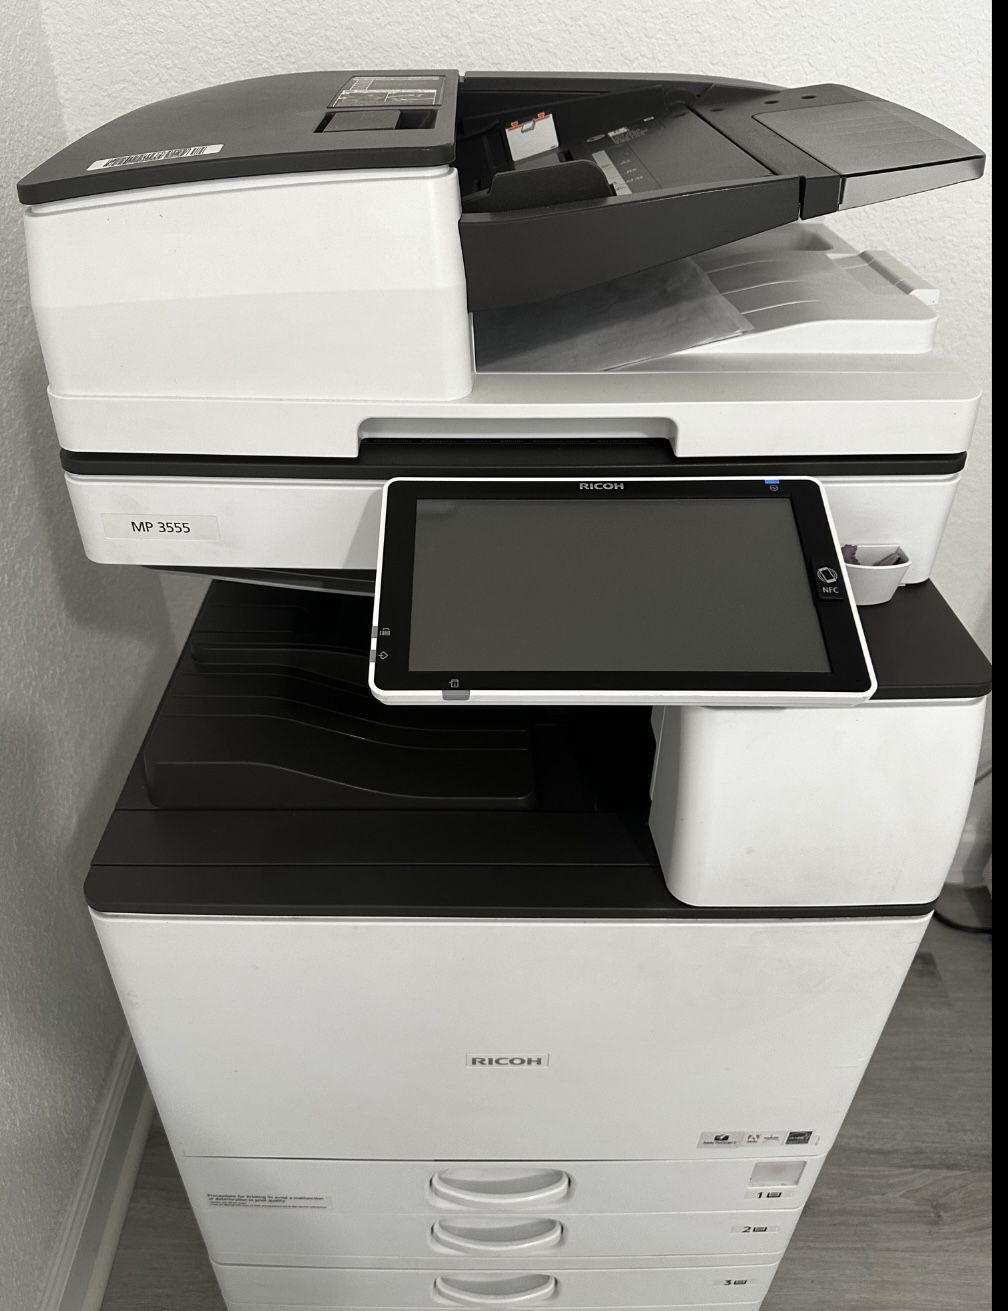 Printer Ricoh Mp3555